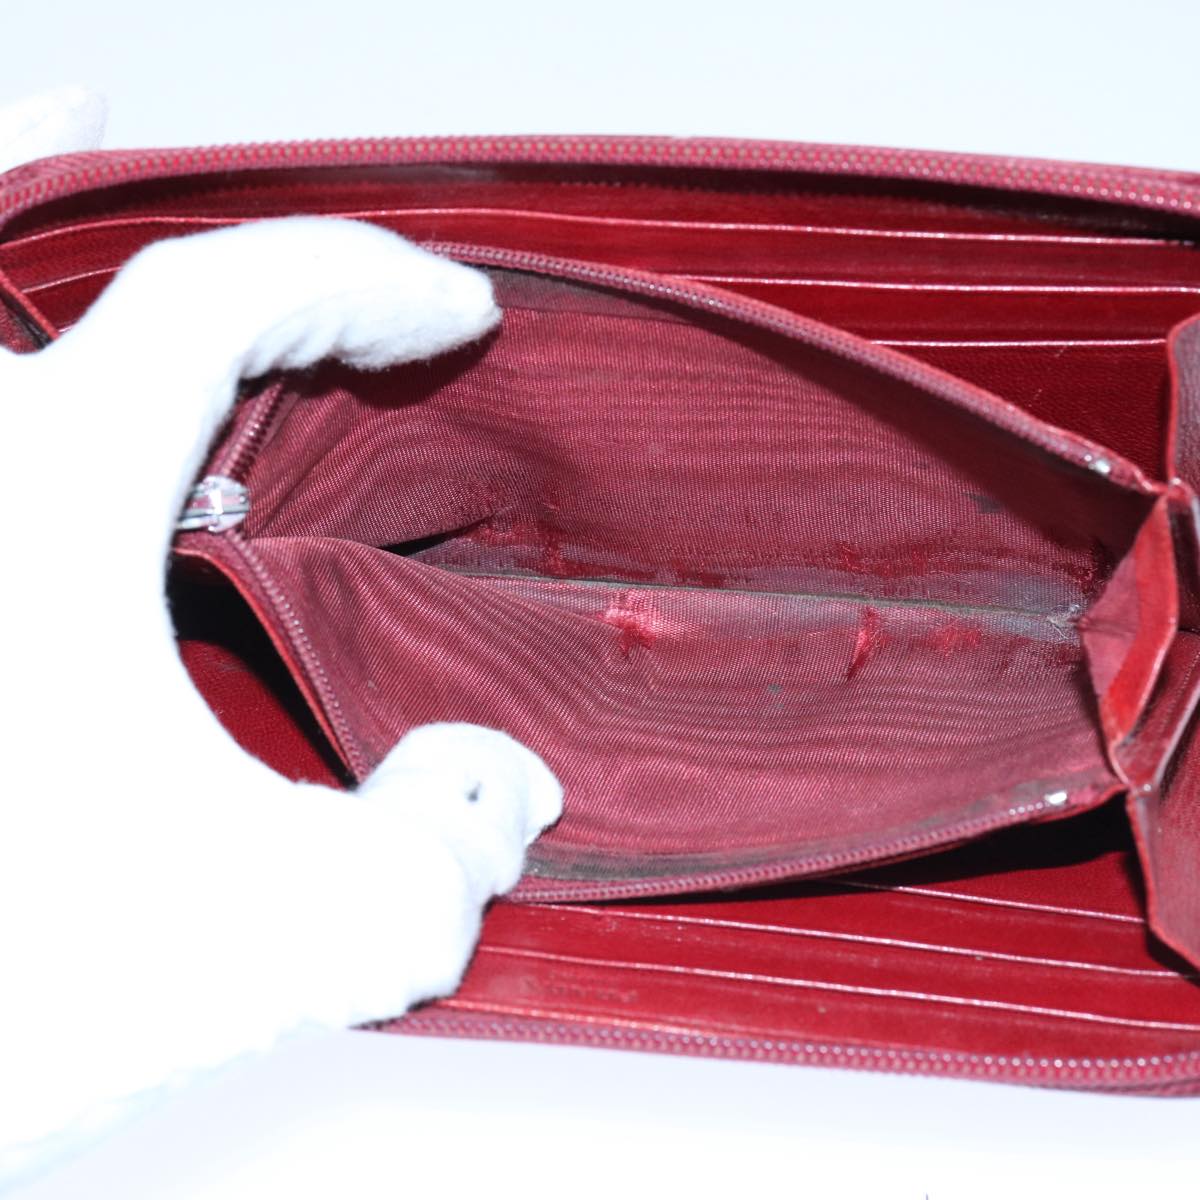 PRADA Wallet Leather 6Set Black Red Auth ar10913